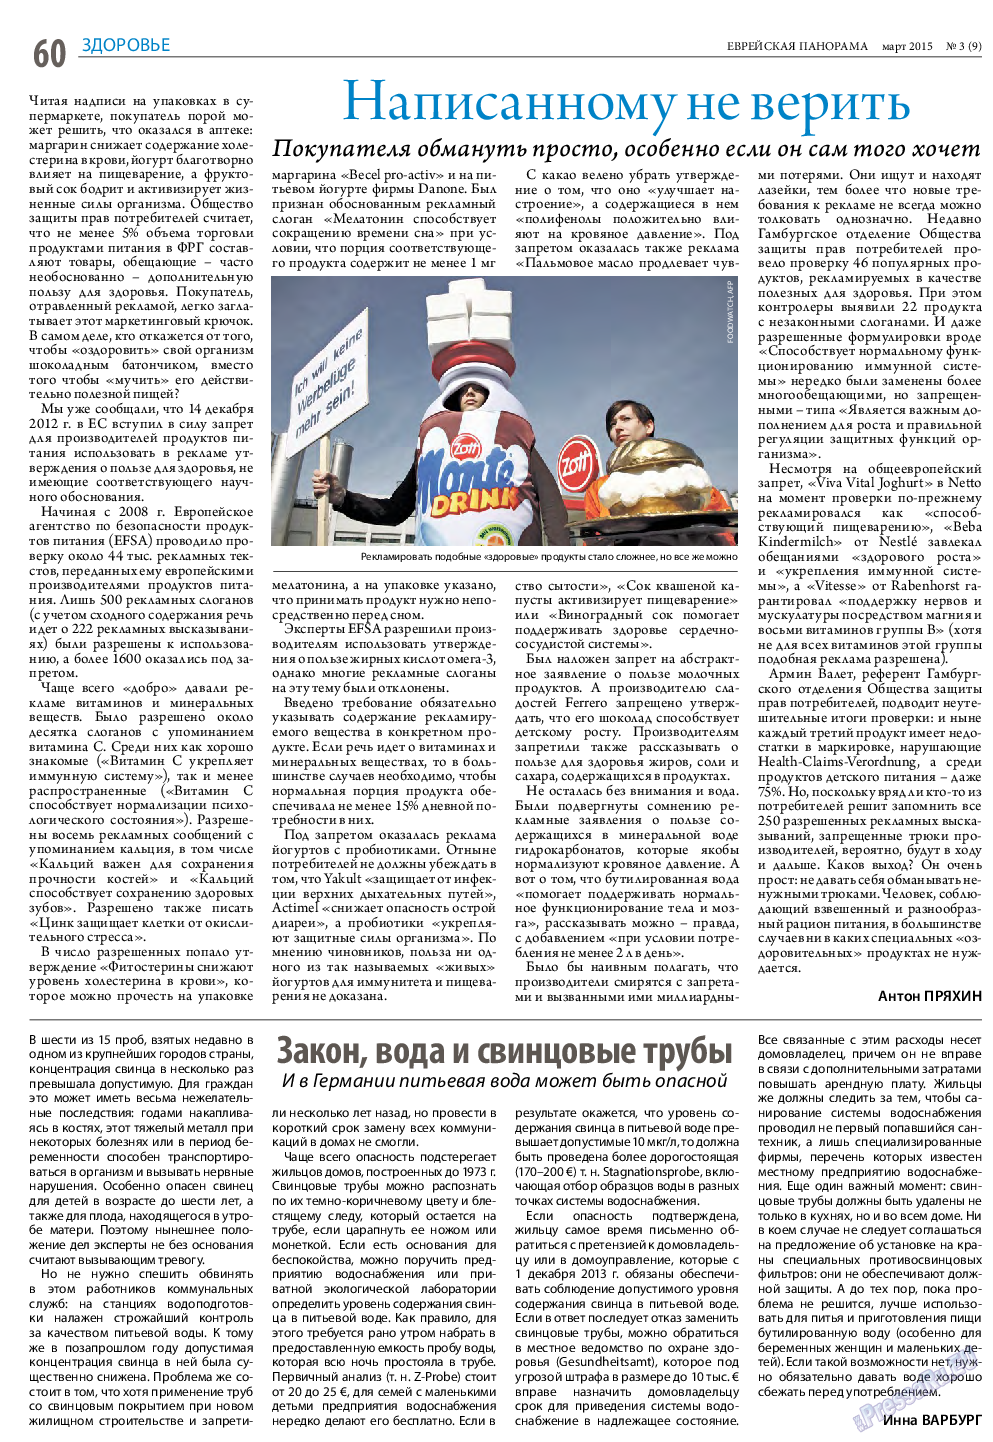 Еврейская панорама, газета. 2015 №3 стр.60